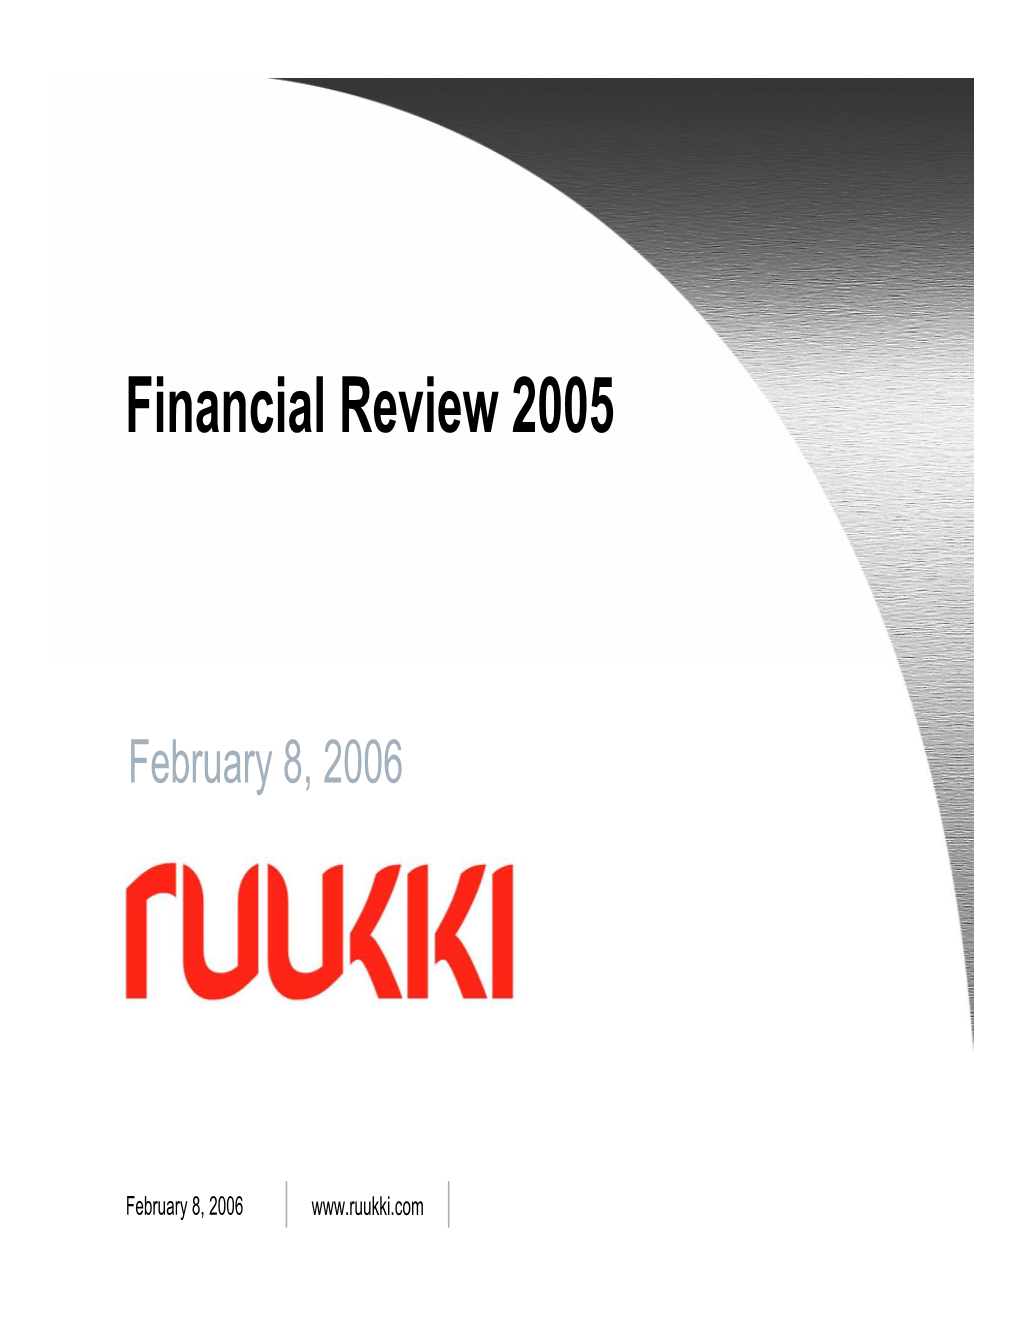 Rautaruukki Corporation Financial Review 2005